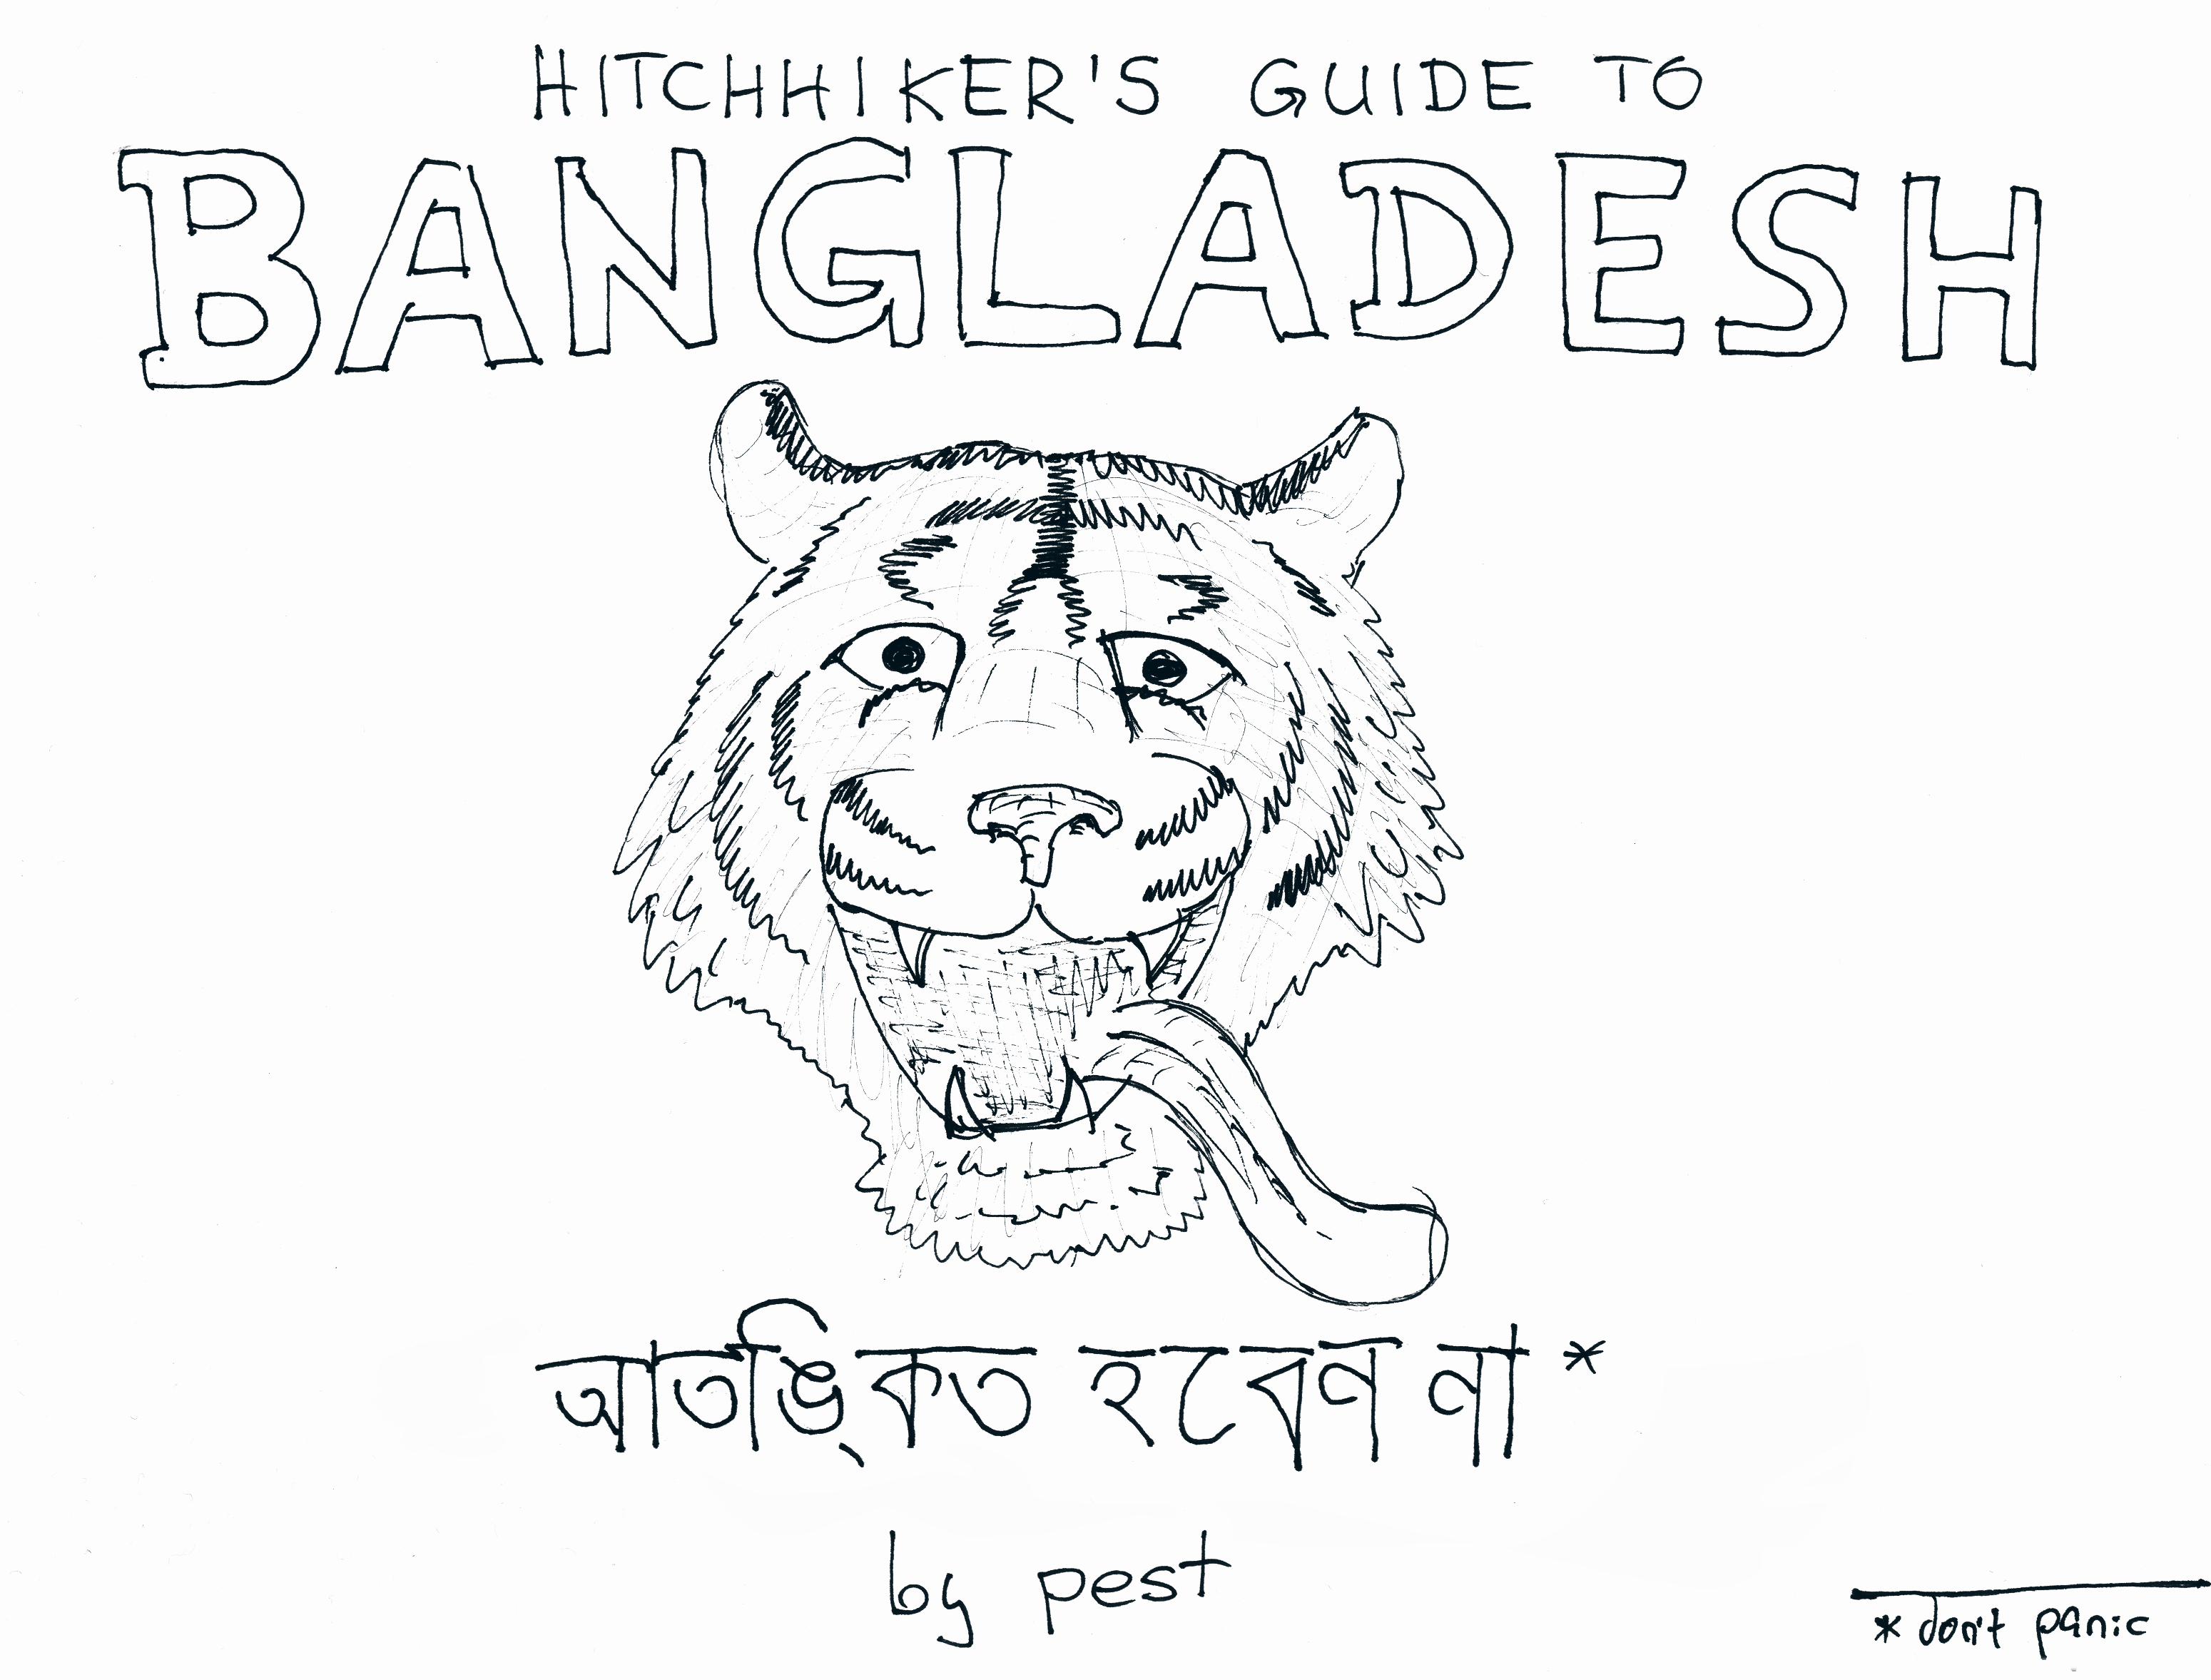 Hitchhiker's Guide to Bangladesh